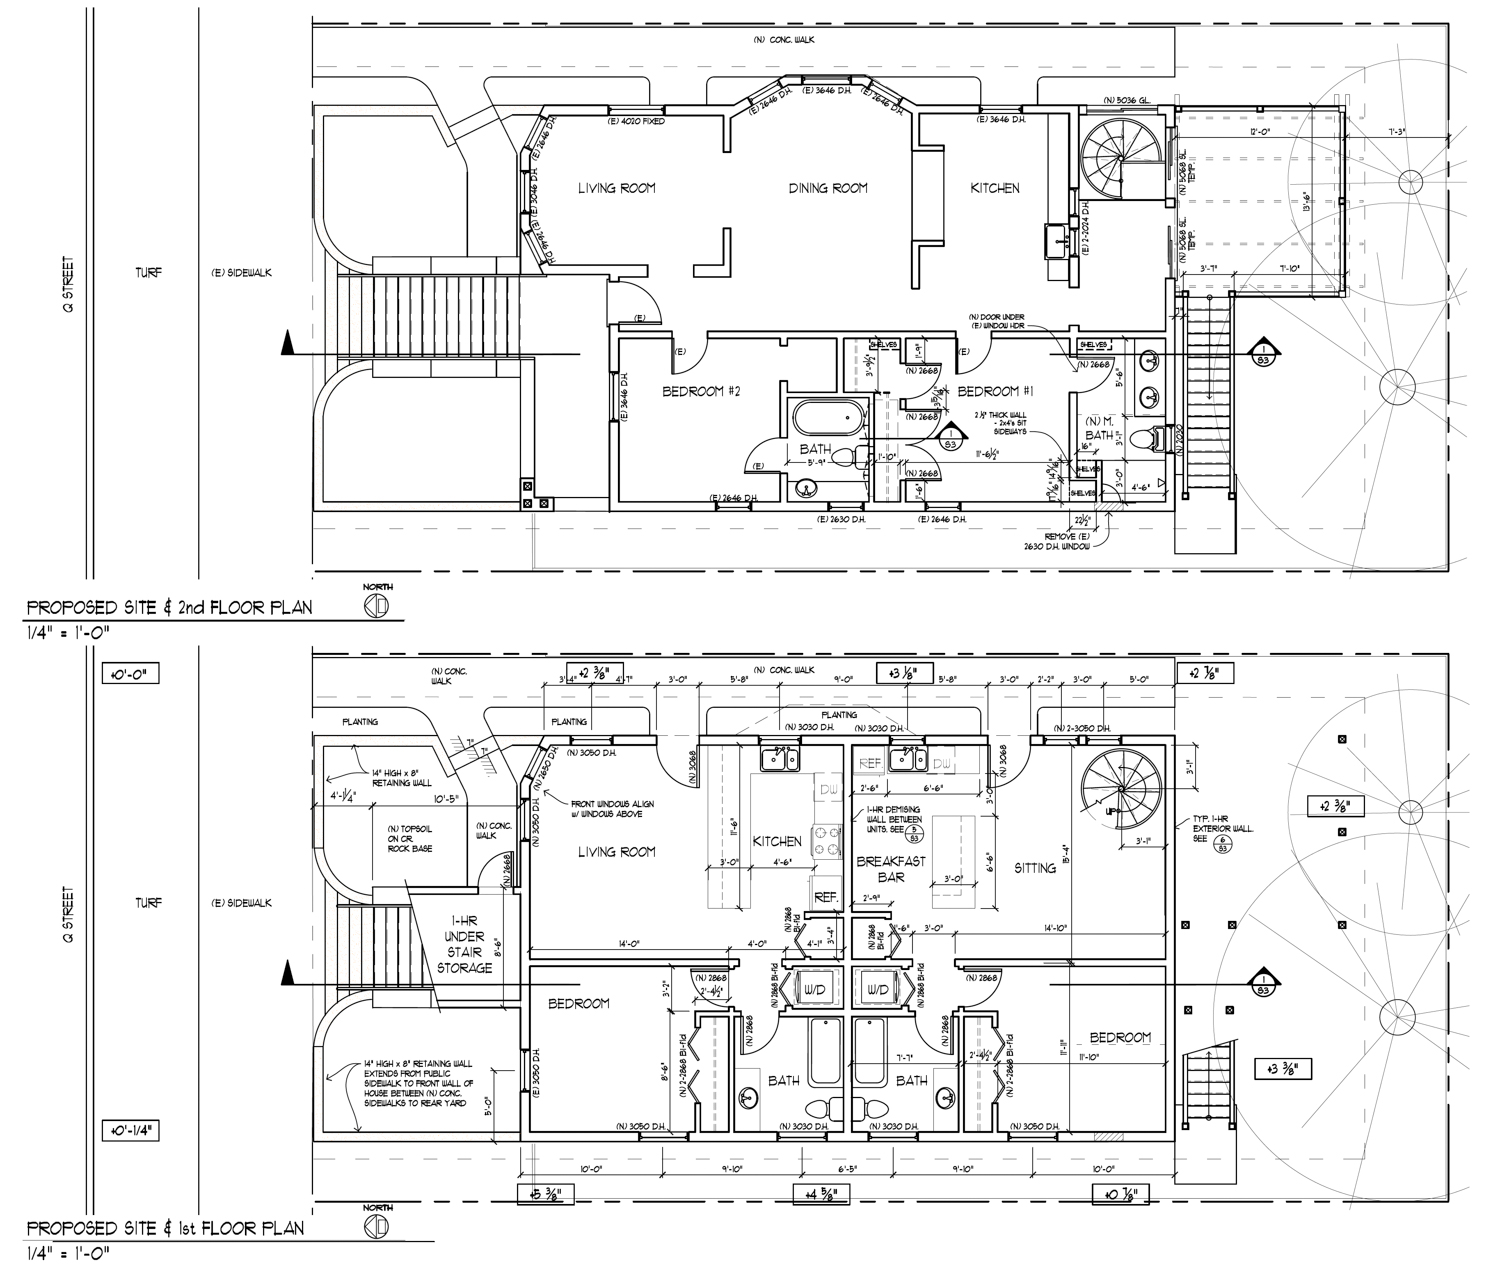 2526 Q Street floor plan, drawing by Tim Sullivan Engineering